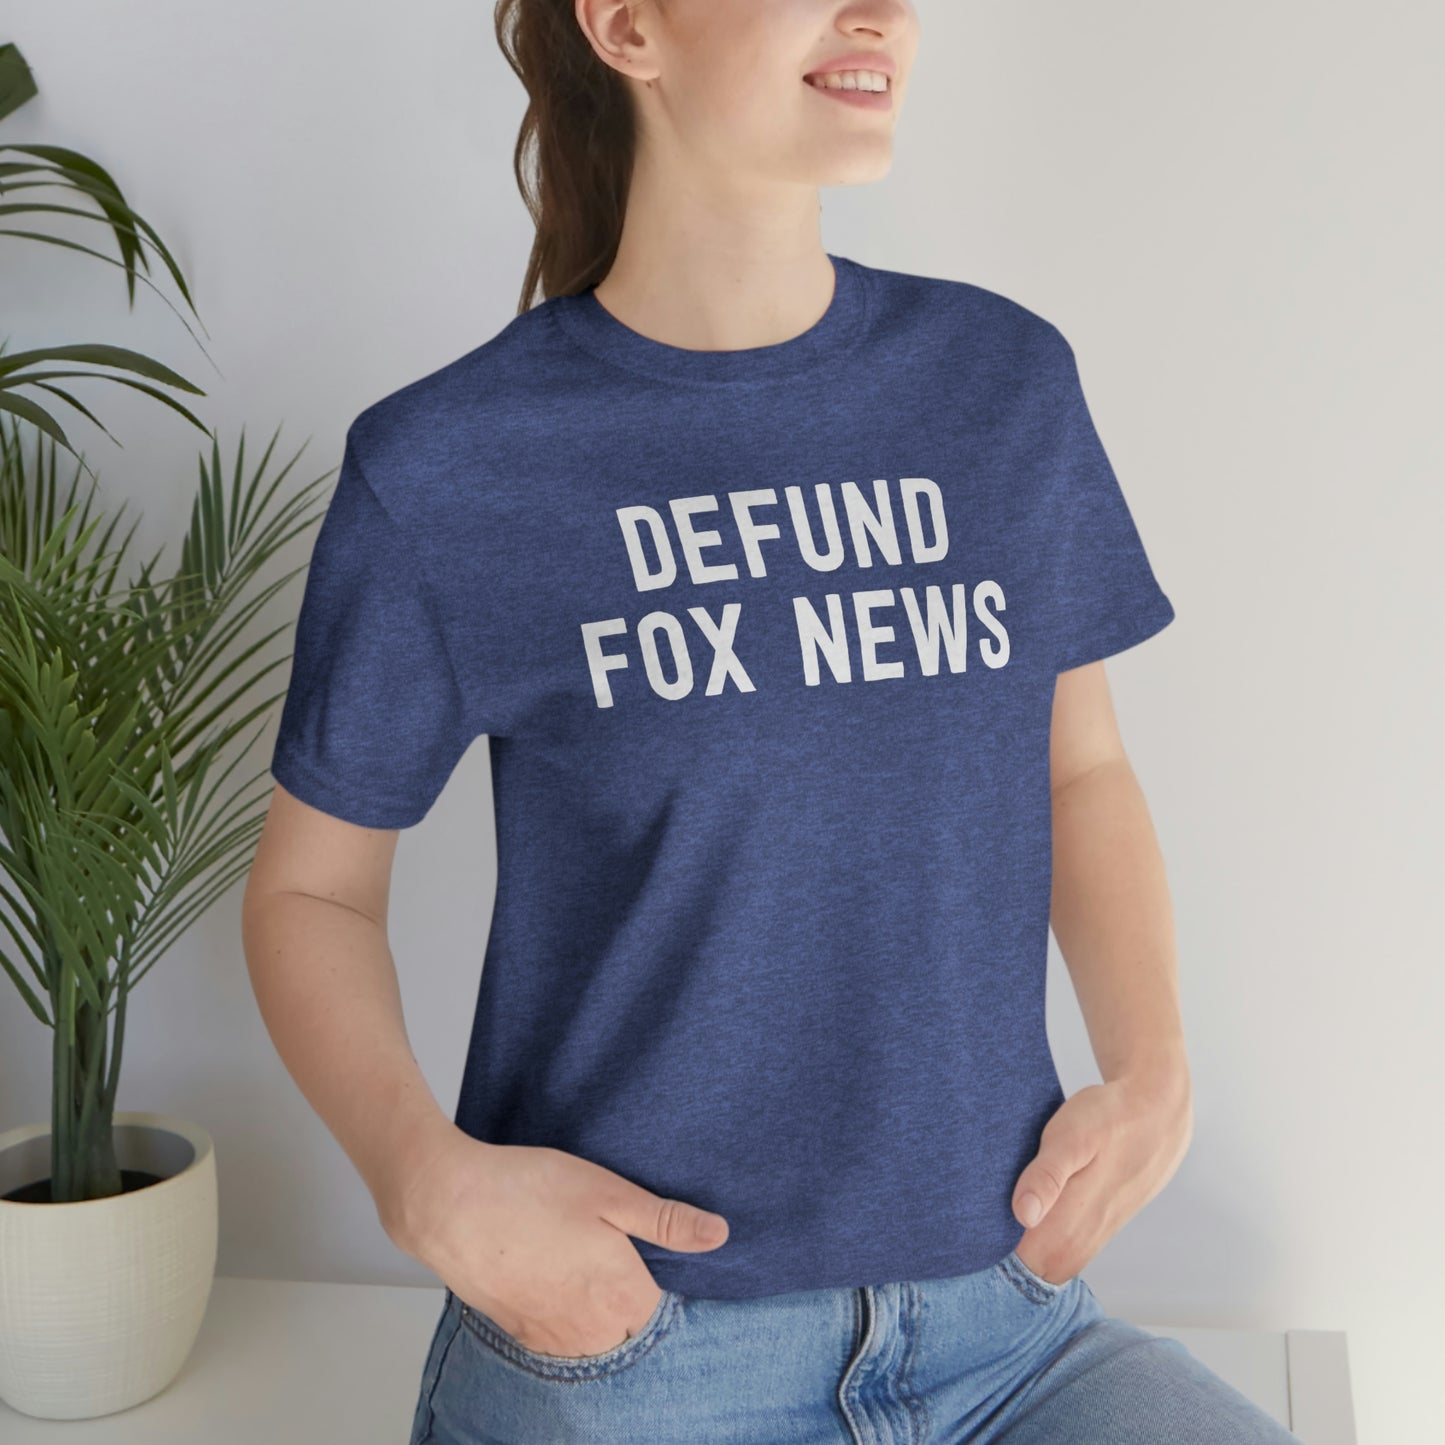 Defund Fox News T-Shirt [Modern Fit]